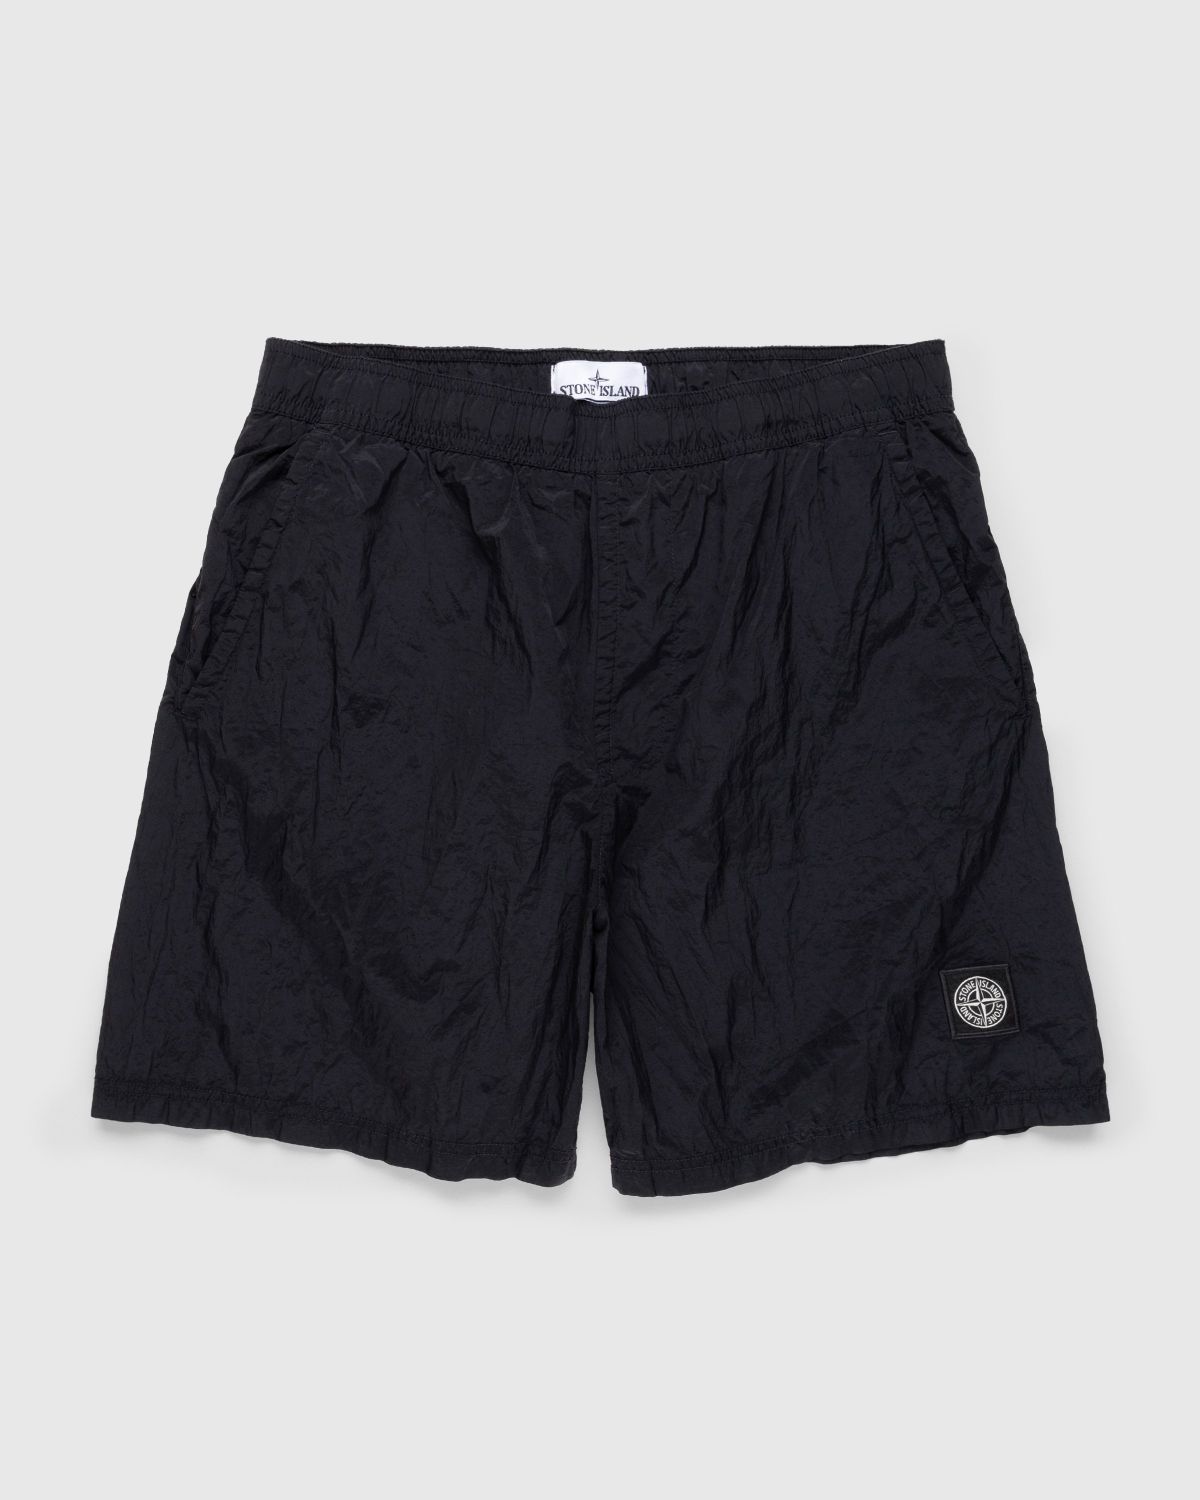 Stone Island – Nylon Metal Beach Shorts Black - Shorts - Black - Image 1